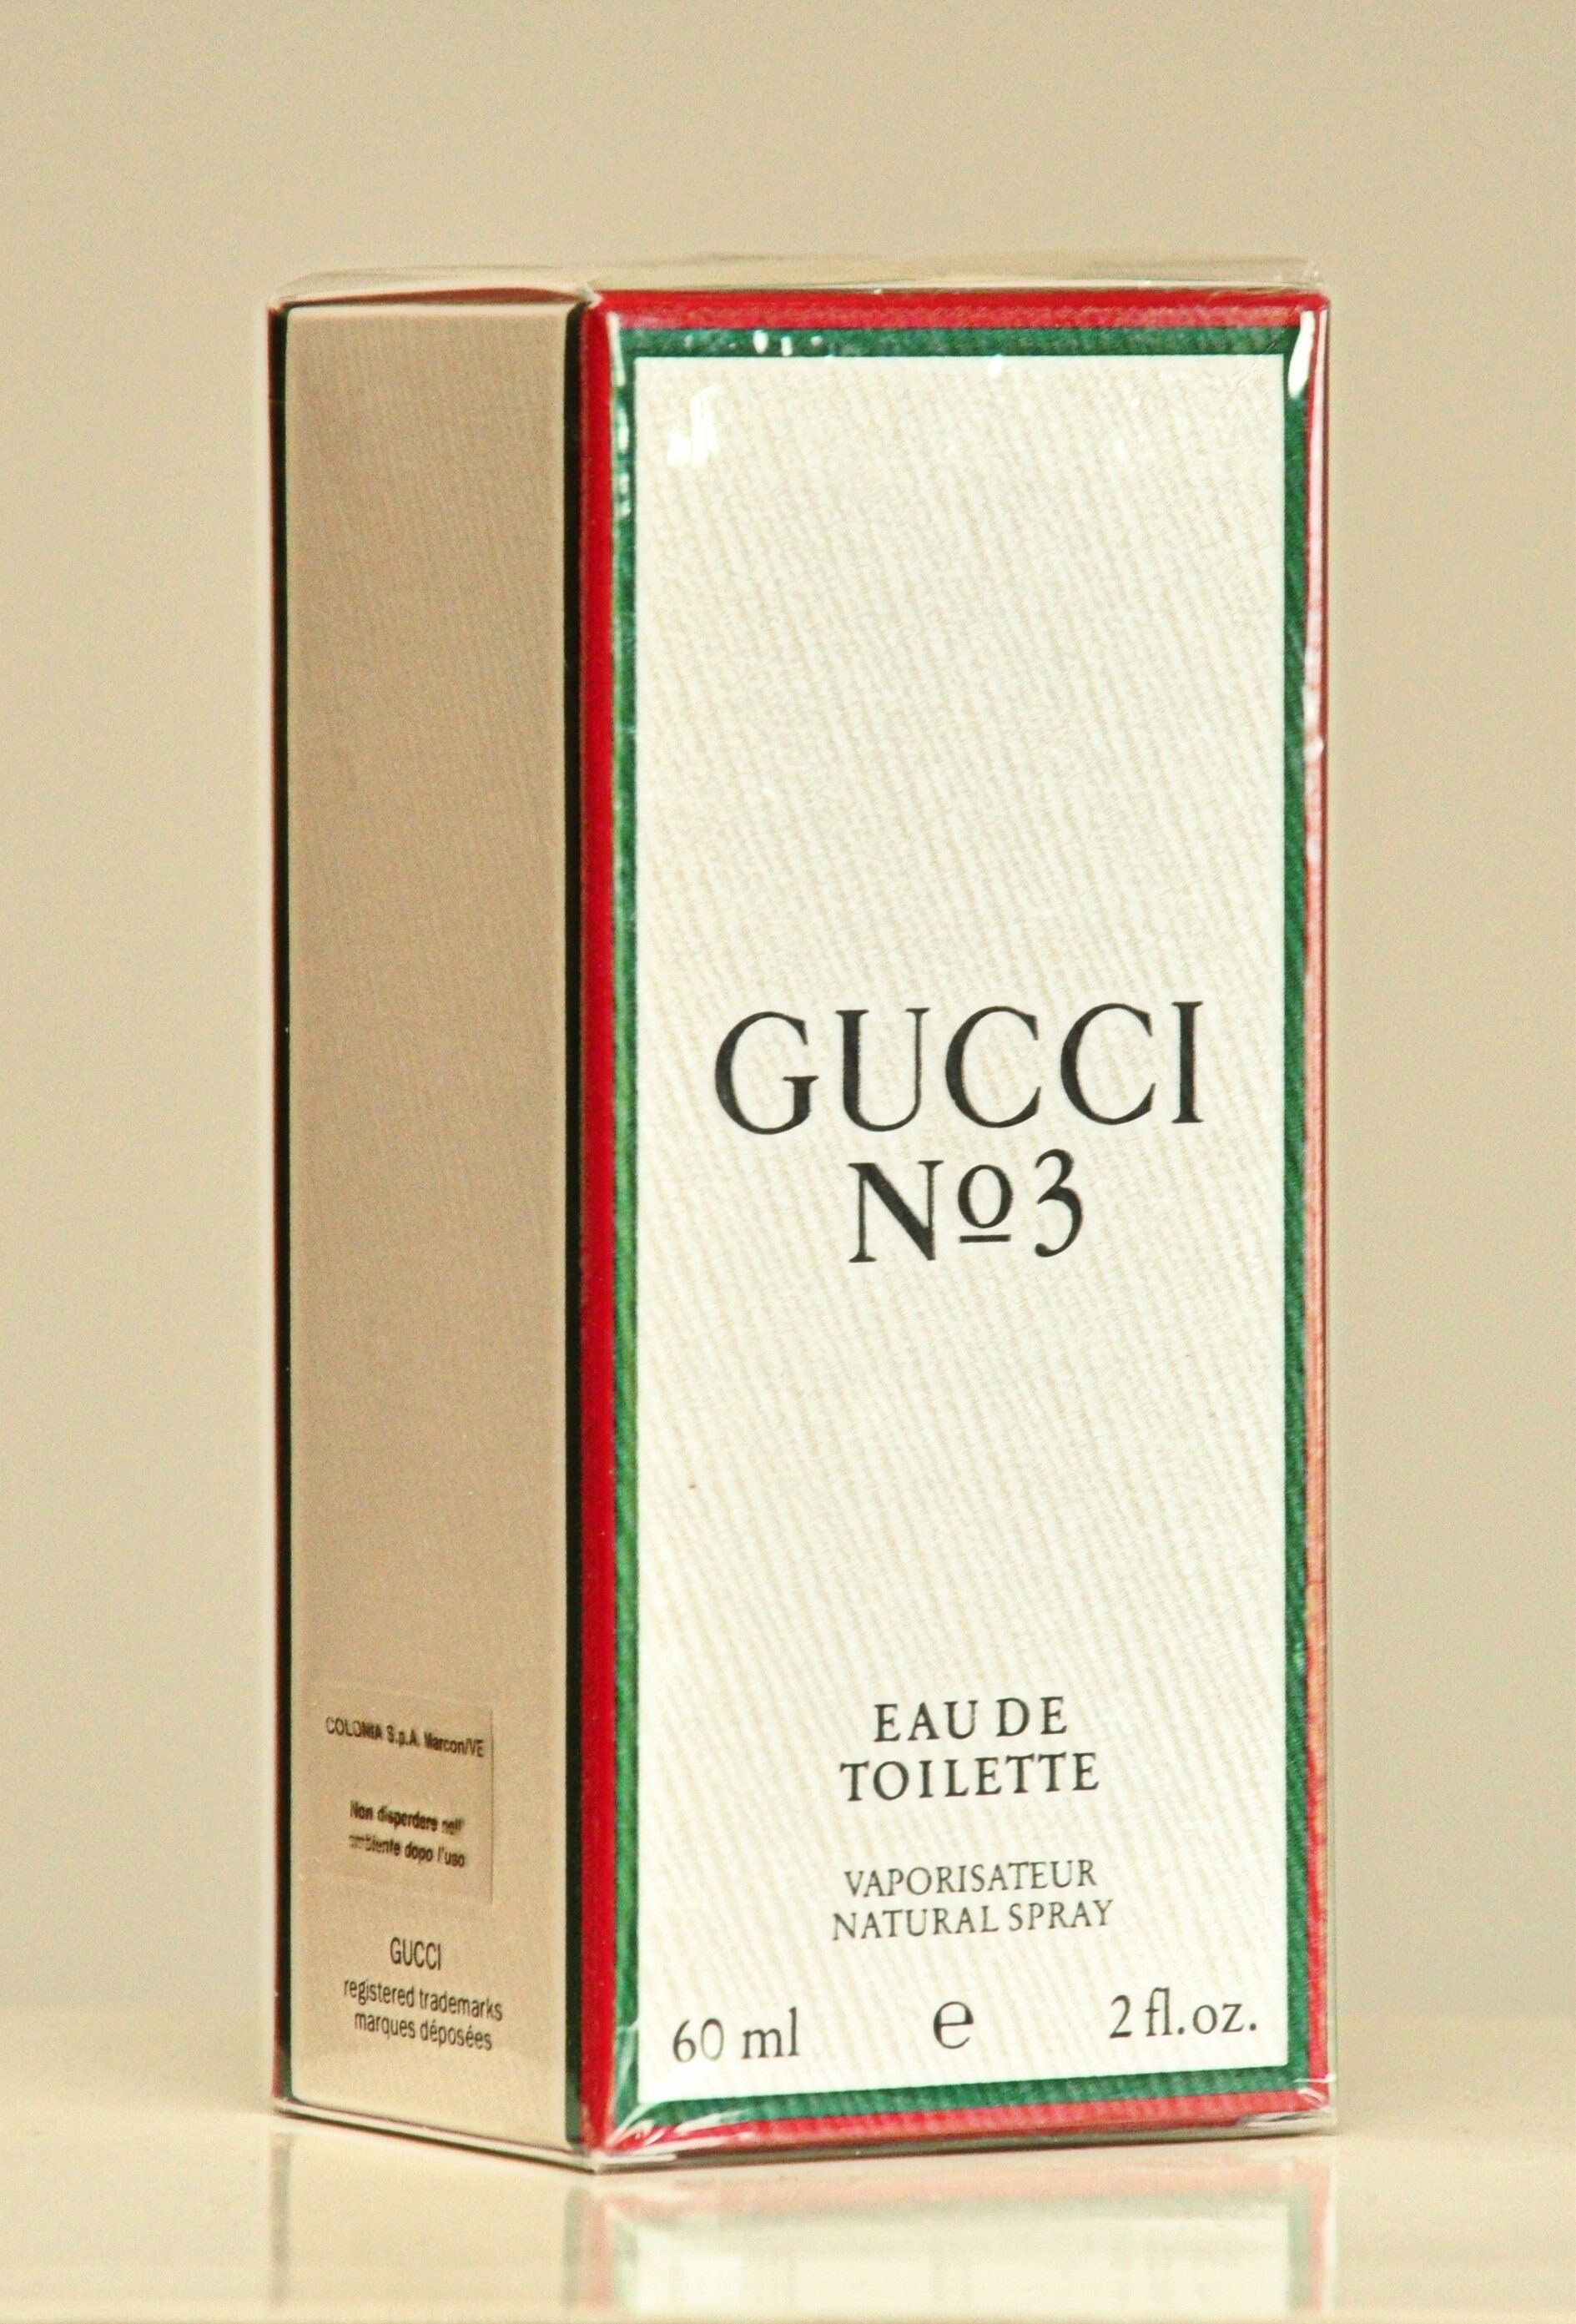 Gucci No 3 by Gucci Eau De Toilette Edt ml 2 Fl. Oz. Spray